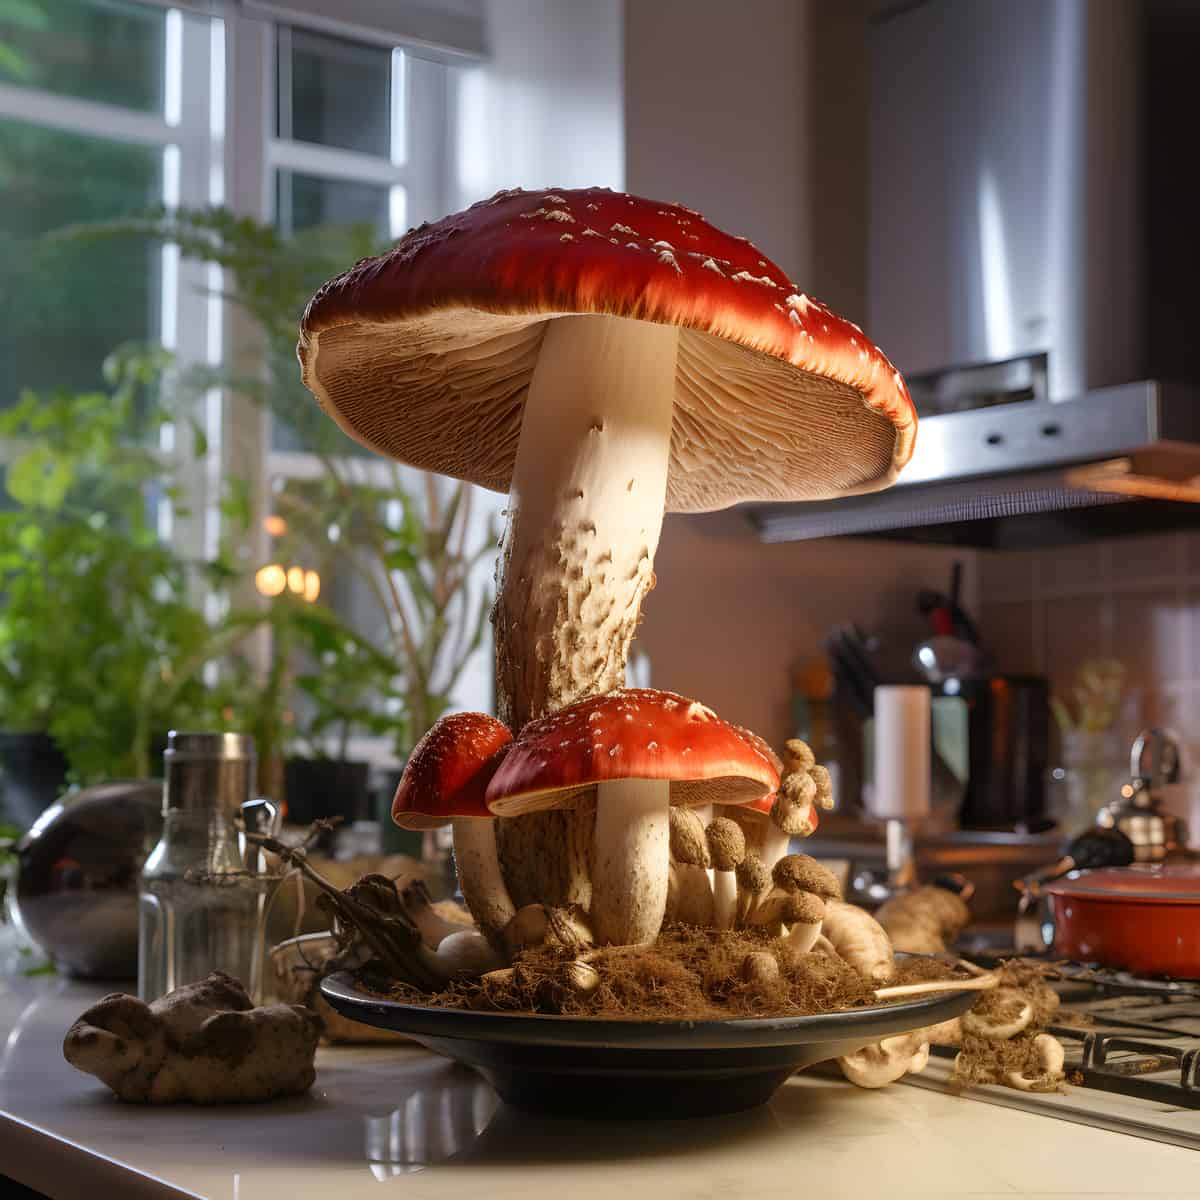 Garden Giant Mushrooms on a kitchen counter